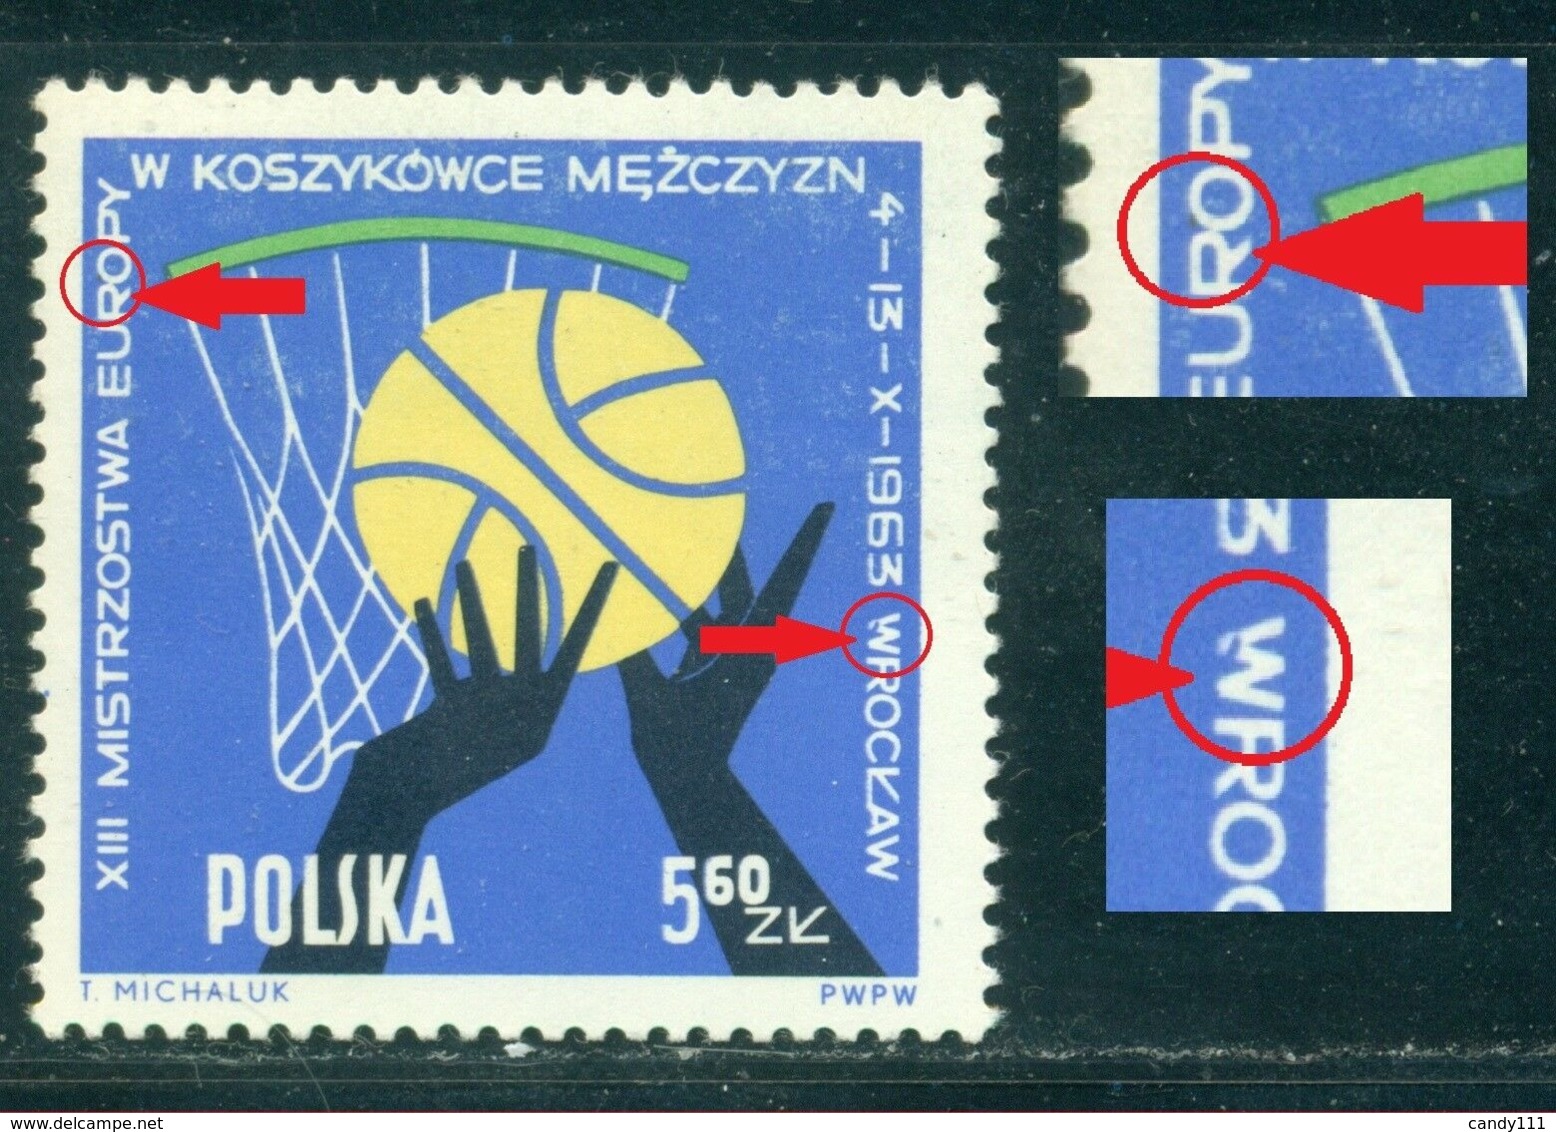 1963 Basketball European Champs,Poland,1423,Color Spot On 'O' And 'W',Error,MNH - Basketball